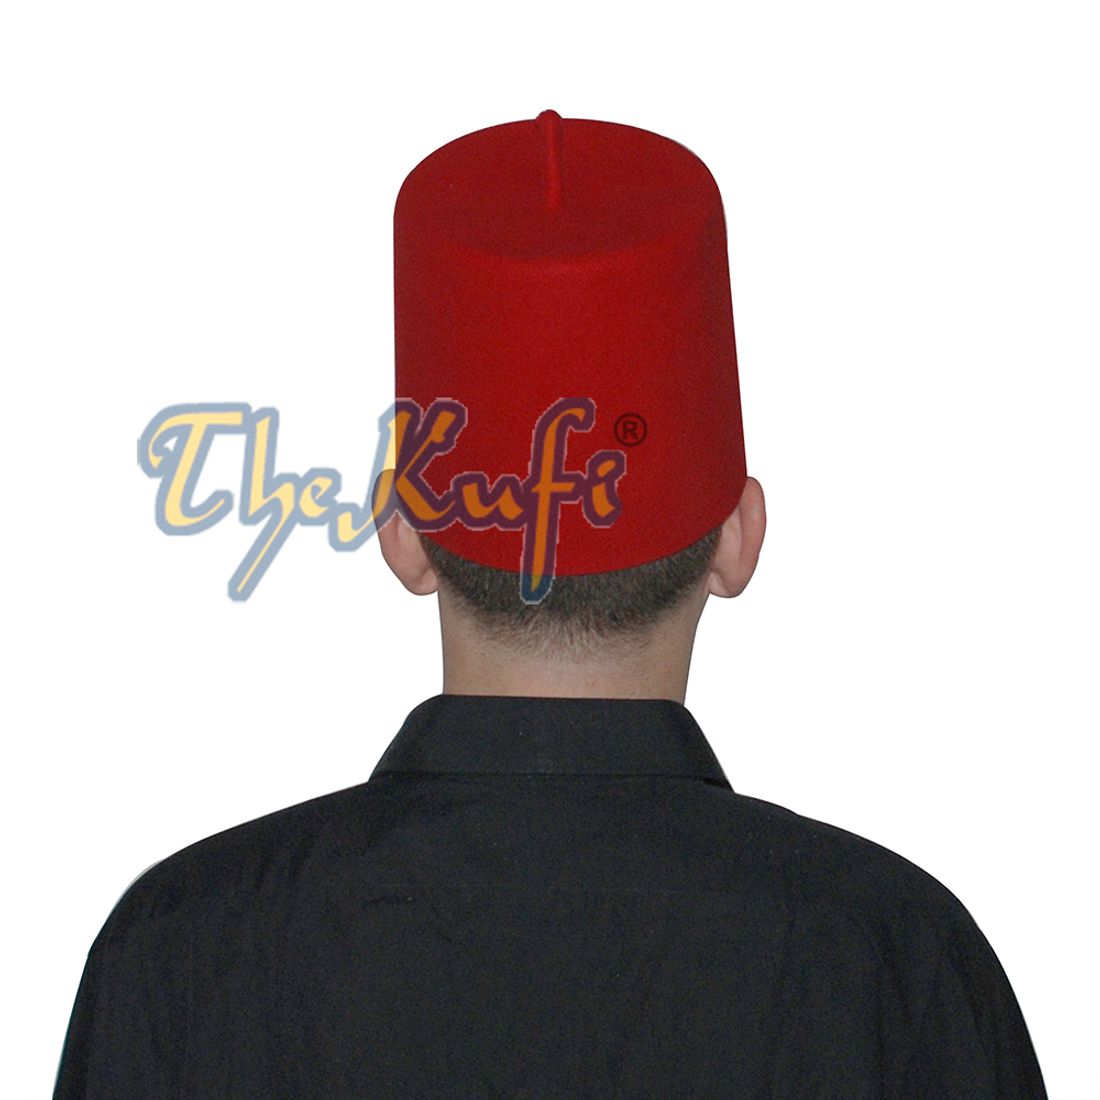 Tradisi Fez Merah Tinggi Merasa Tarboosh Berlubang dengan Batang